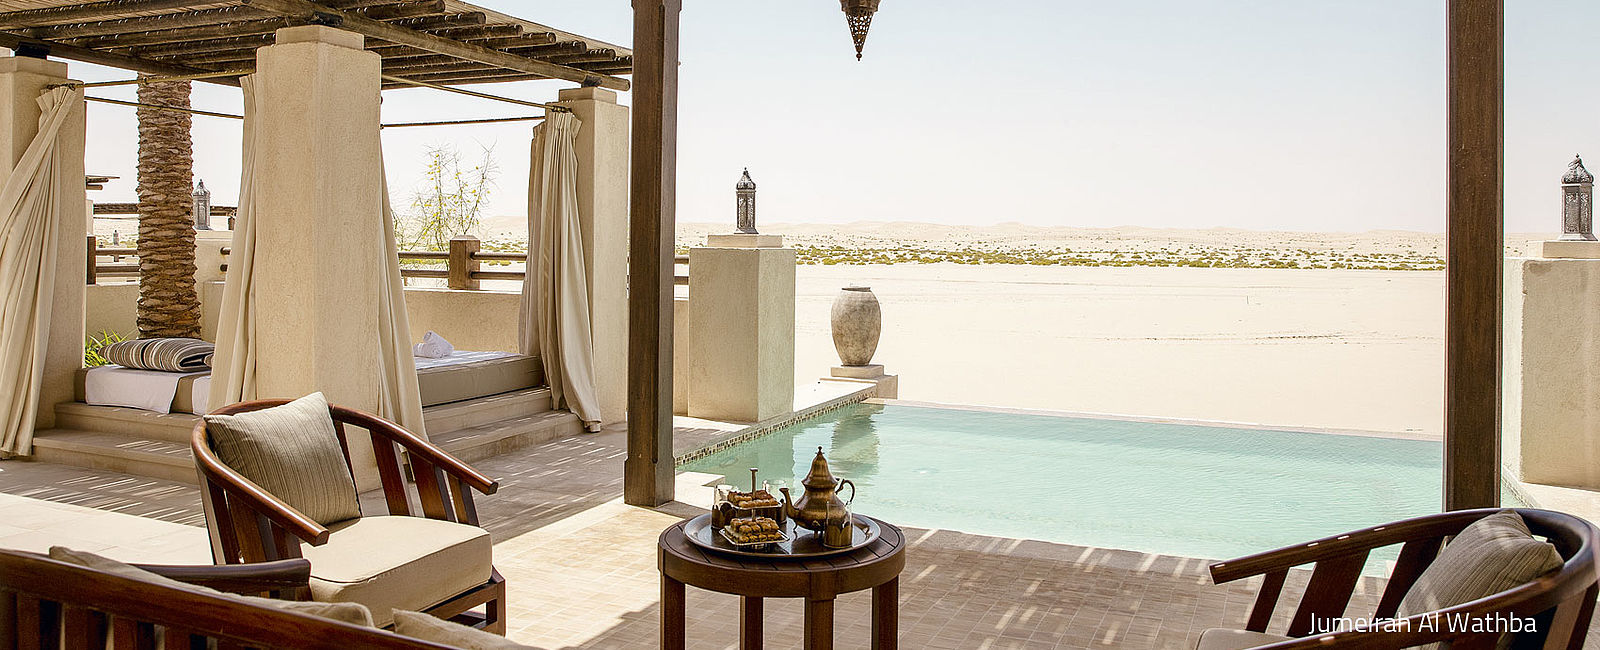 VERY SPECIAL HOTEL
 Jumeirah at Saadiyat Island Resort & Jumeirah Al Wathba 
 Insel und Wüste erleben 